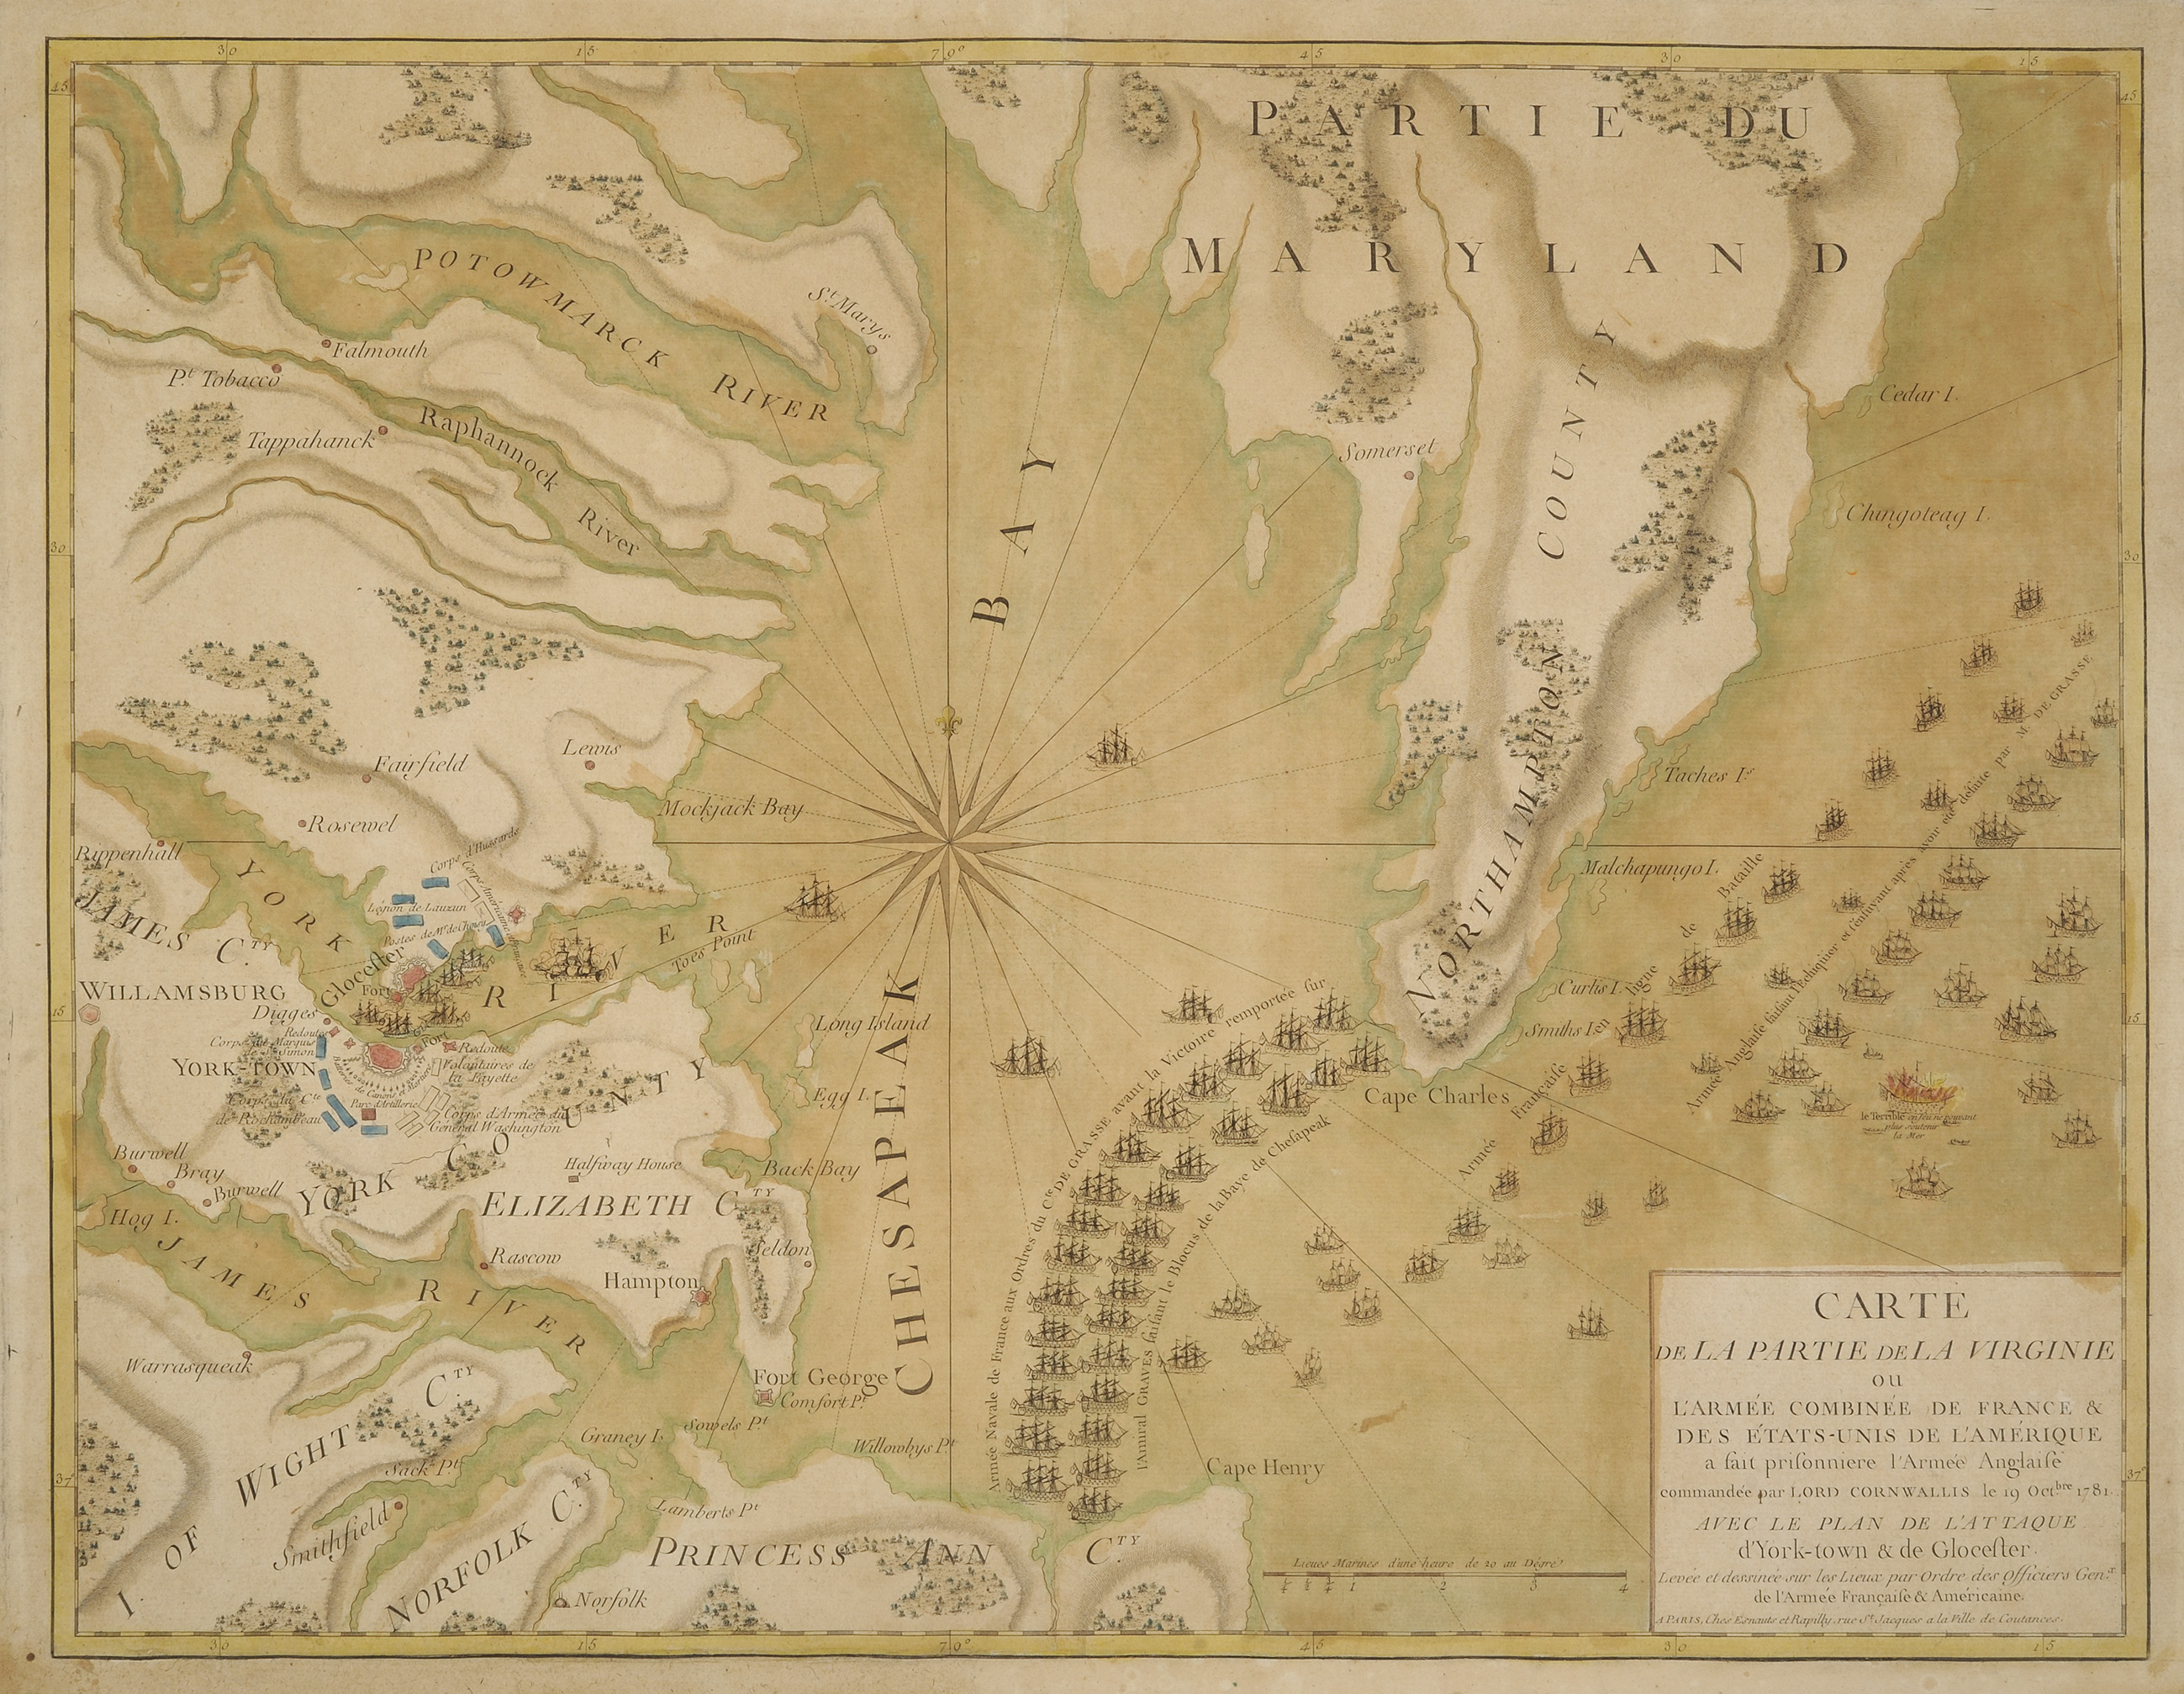 Yorktown Map